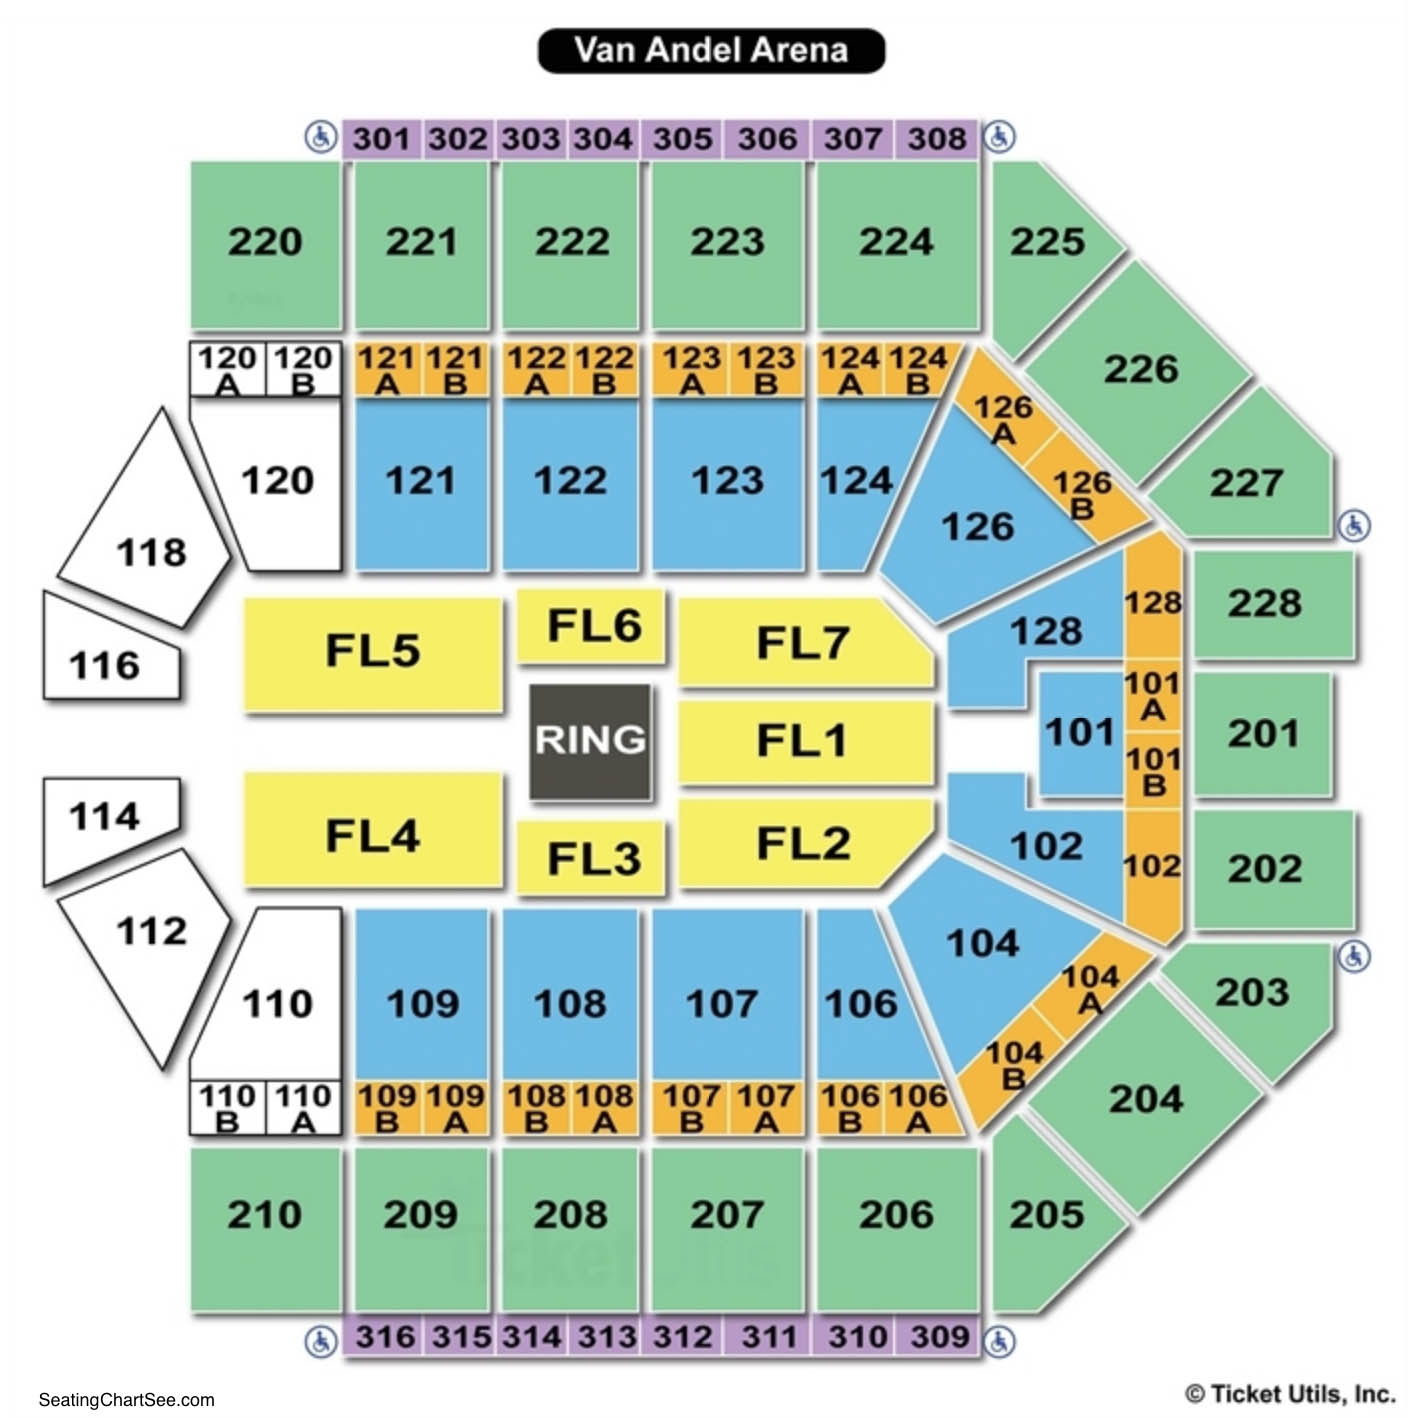 Van Andel Arena Seating Charts Views